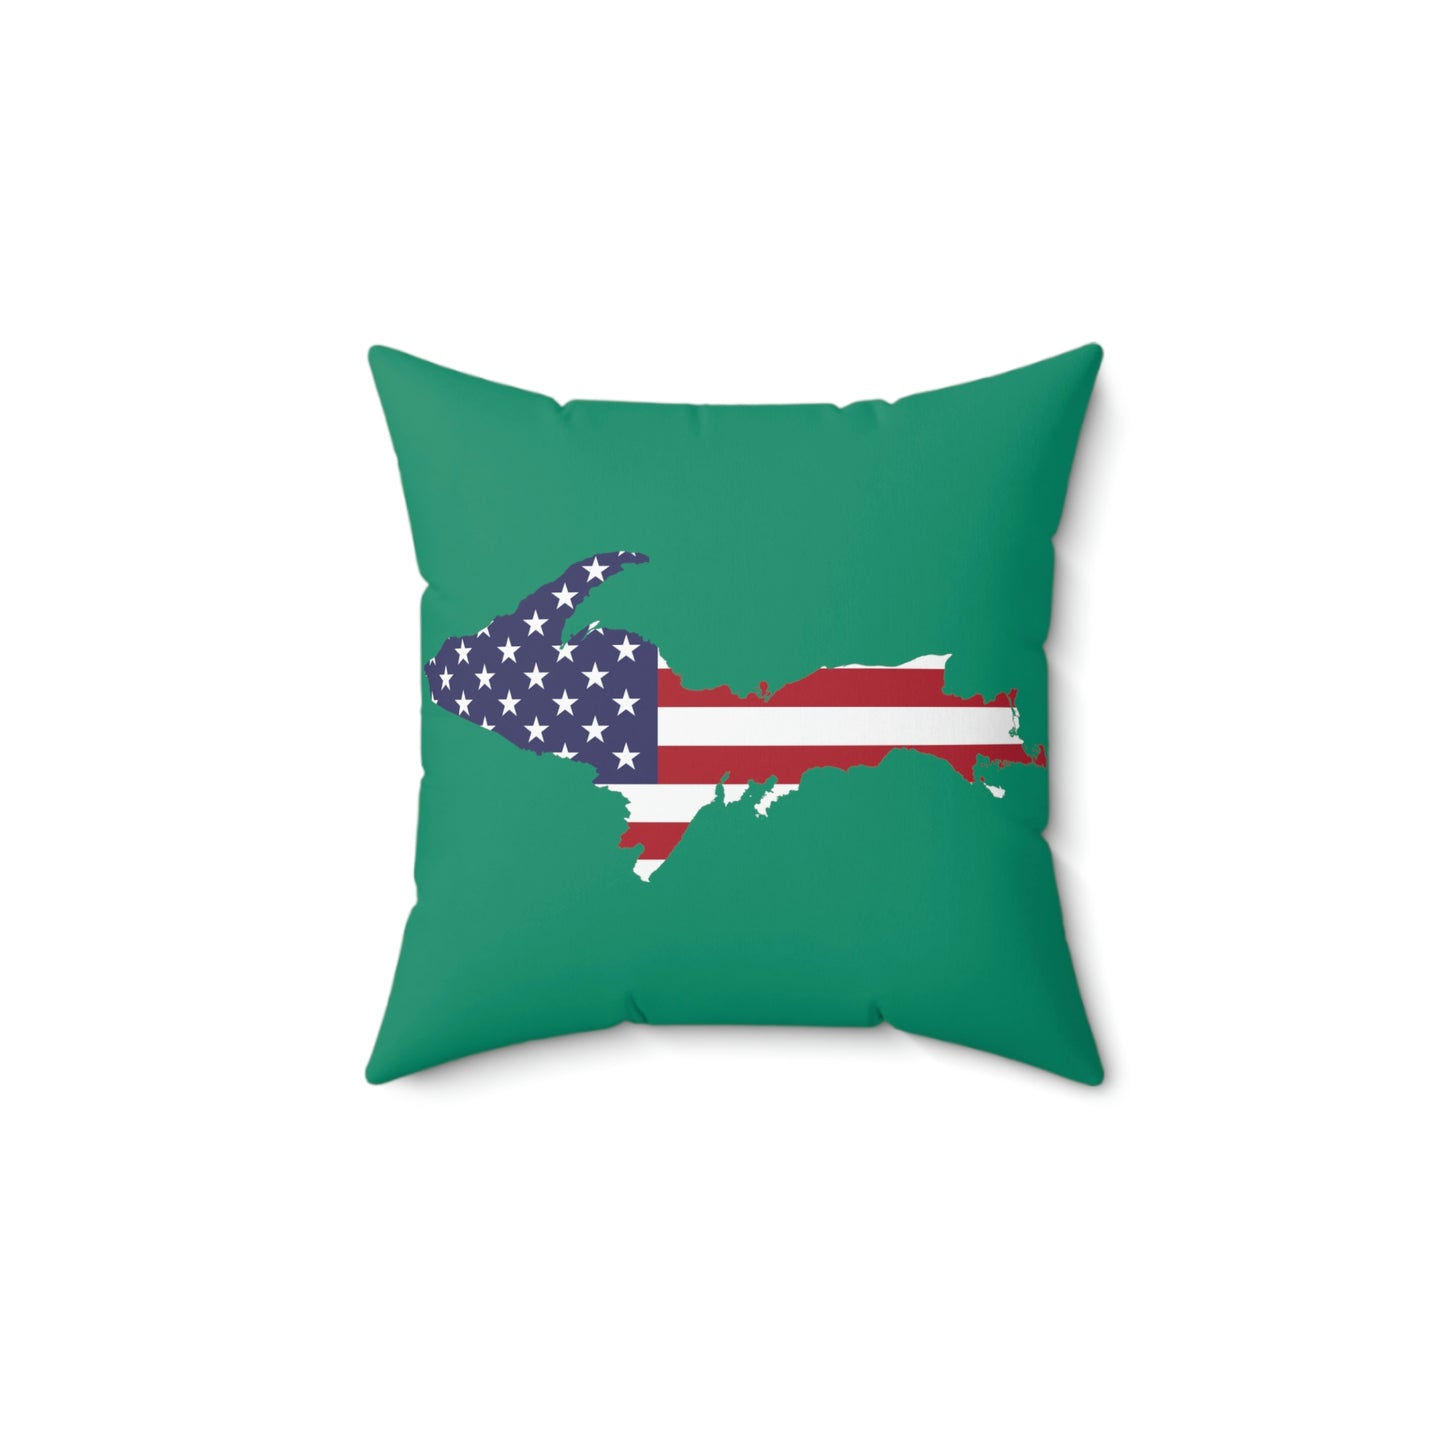 Michigan Upper Peninsula Accent Pillow (w/ UP USA Flag Outline) | Emerald Green